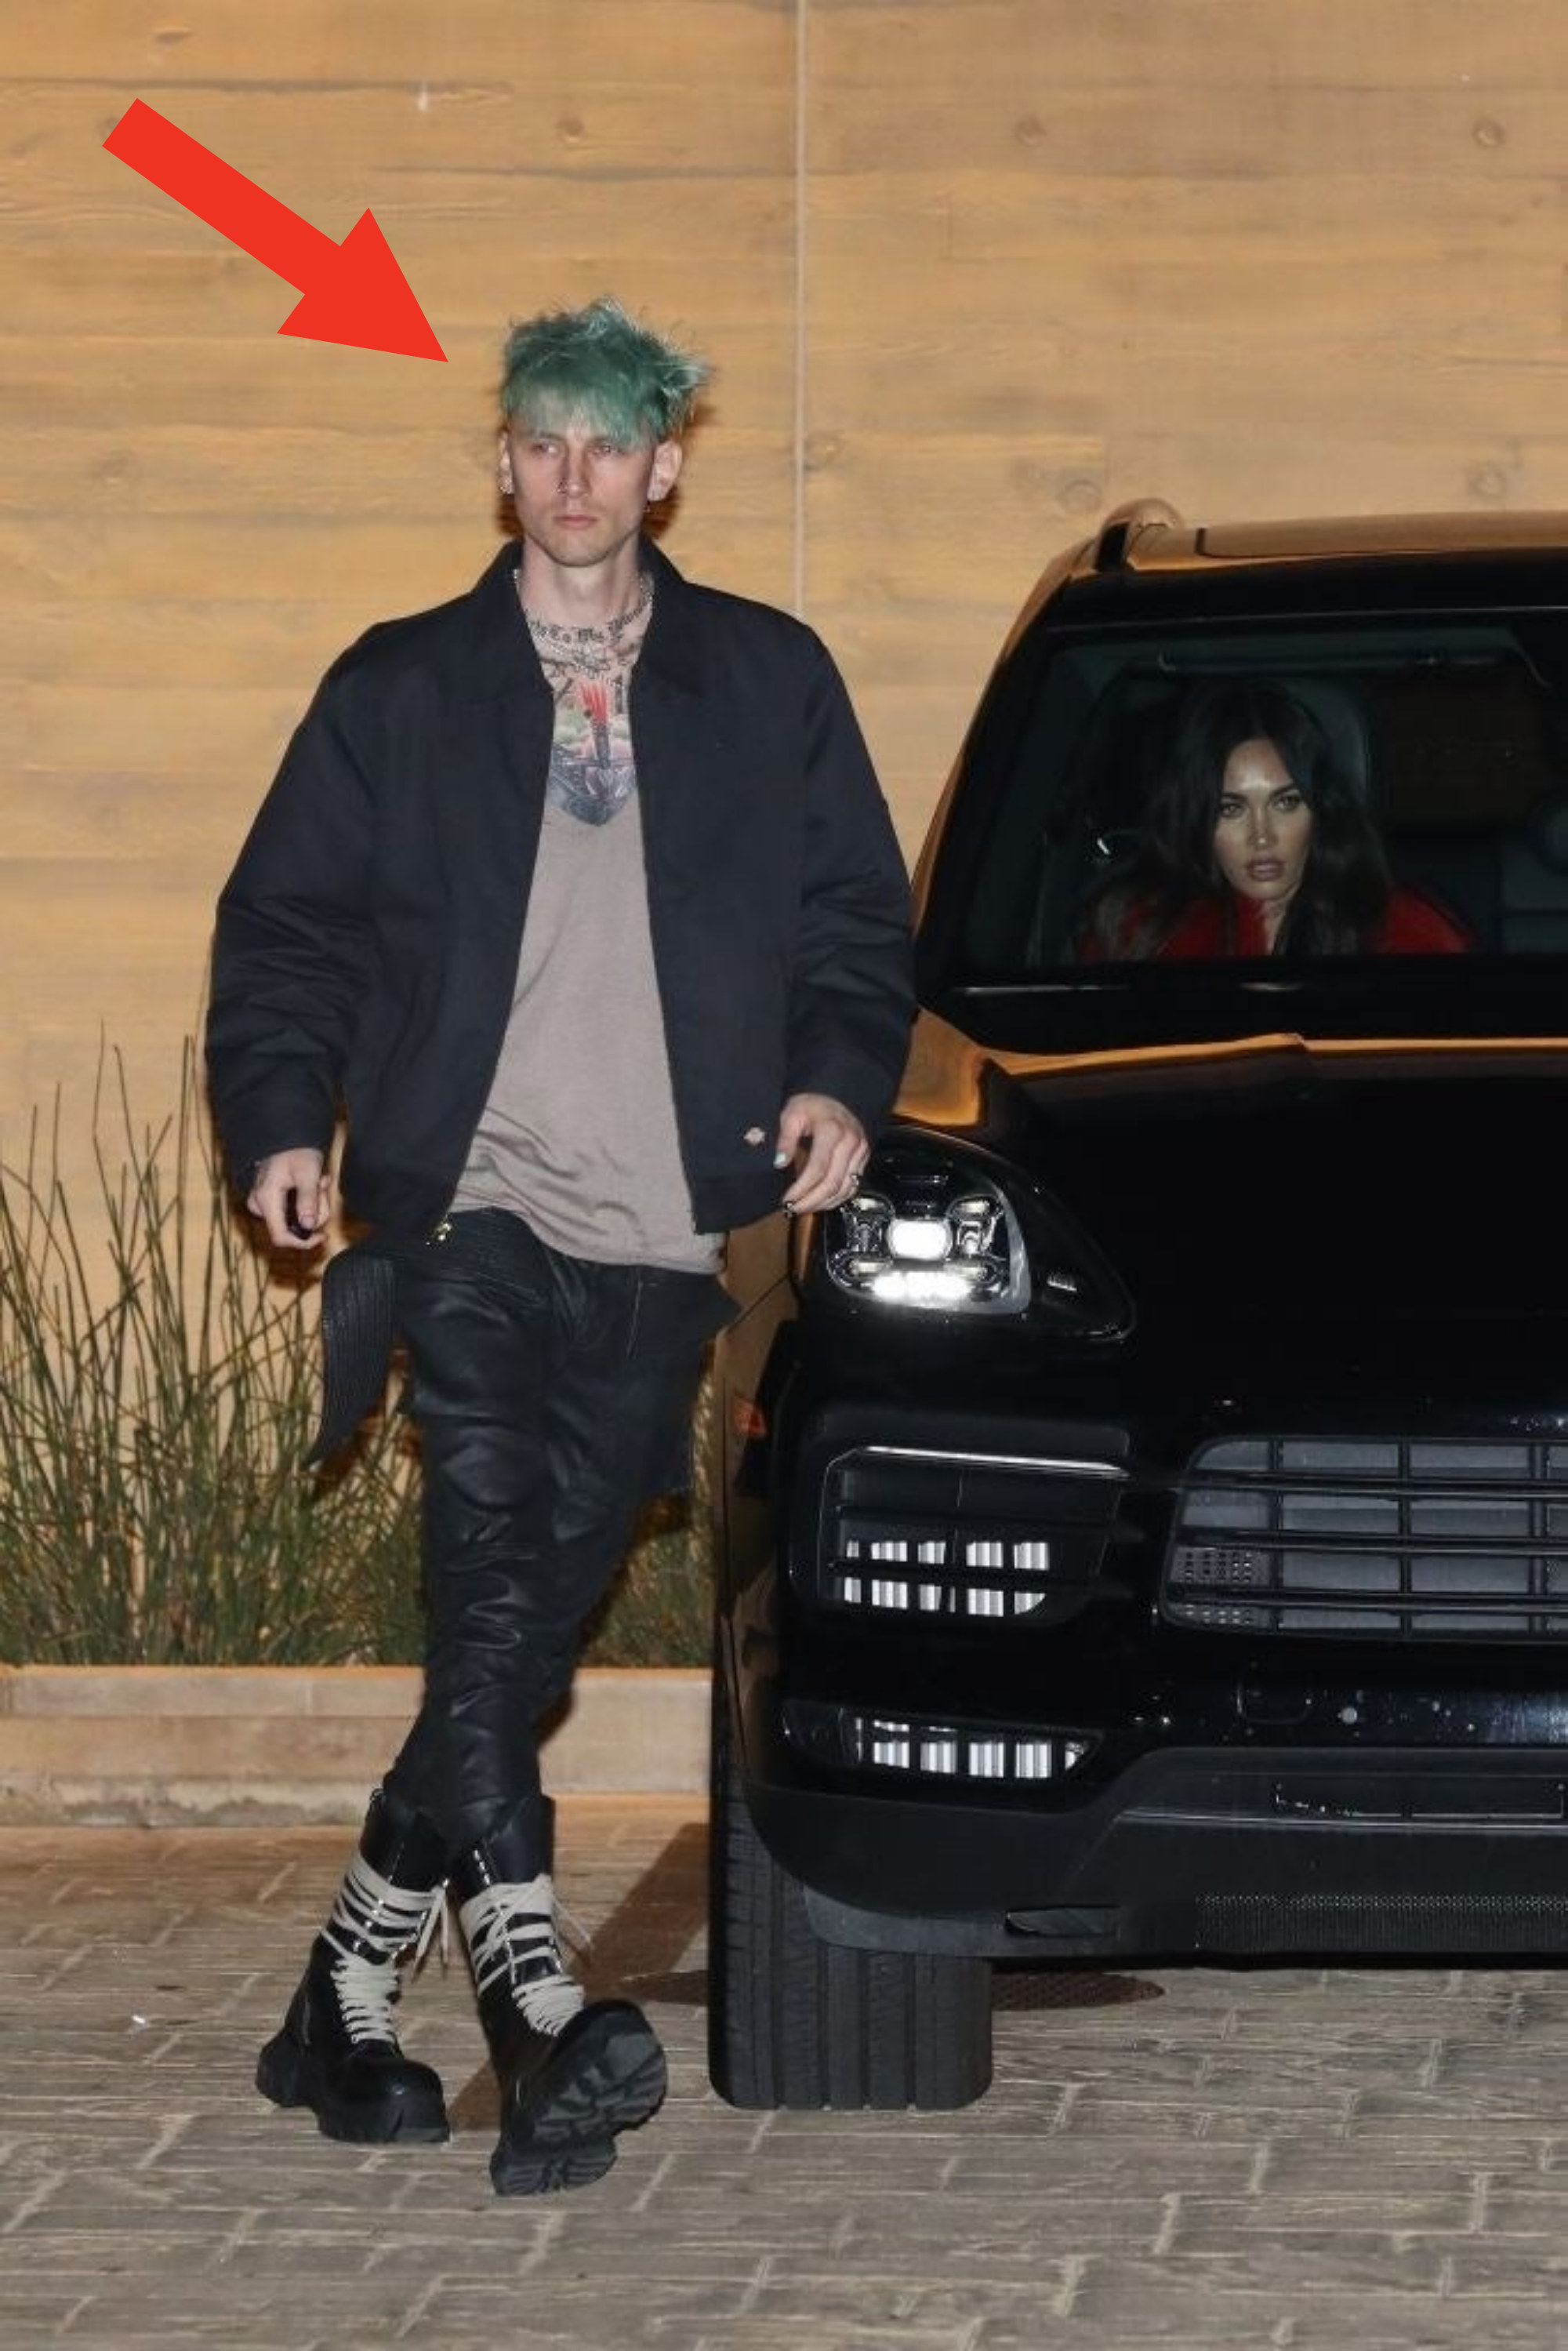 MGK has blue-ish hair as he walks around a car that Megan is sitting in